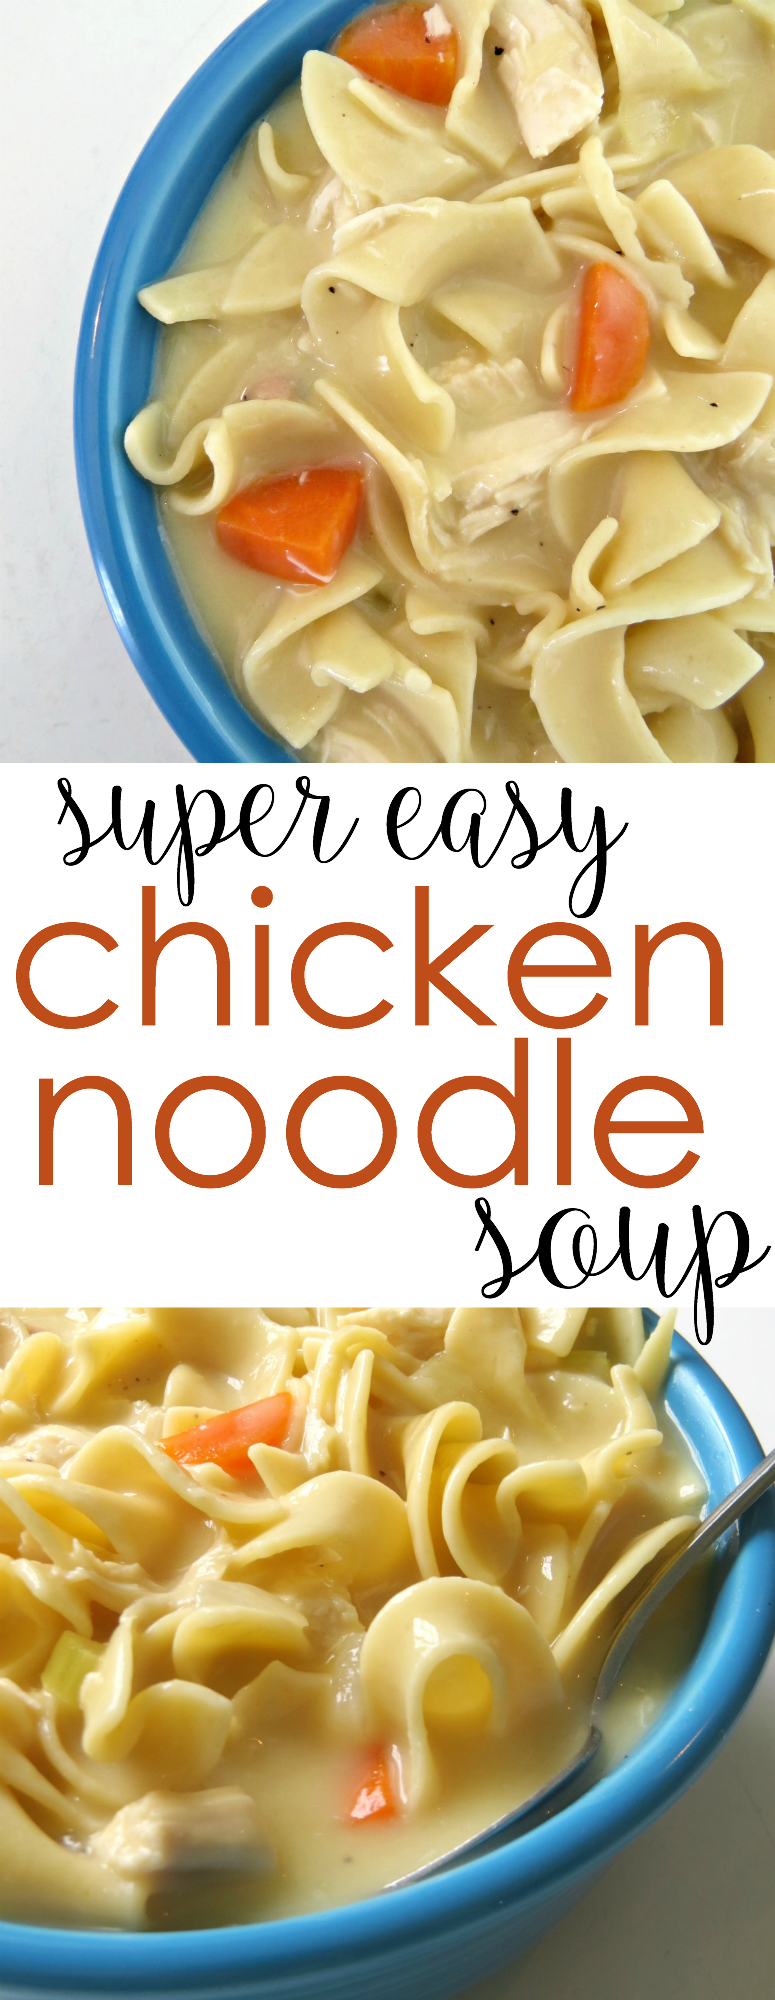 make easy chicken noodle soup